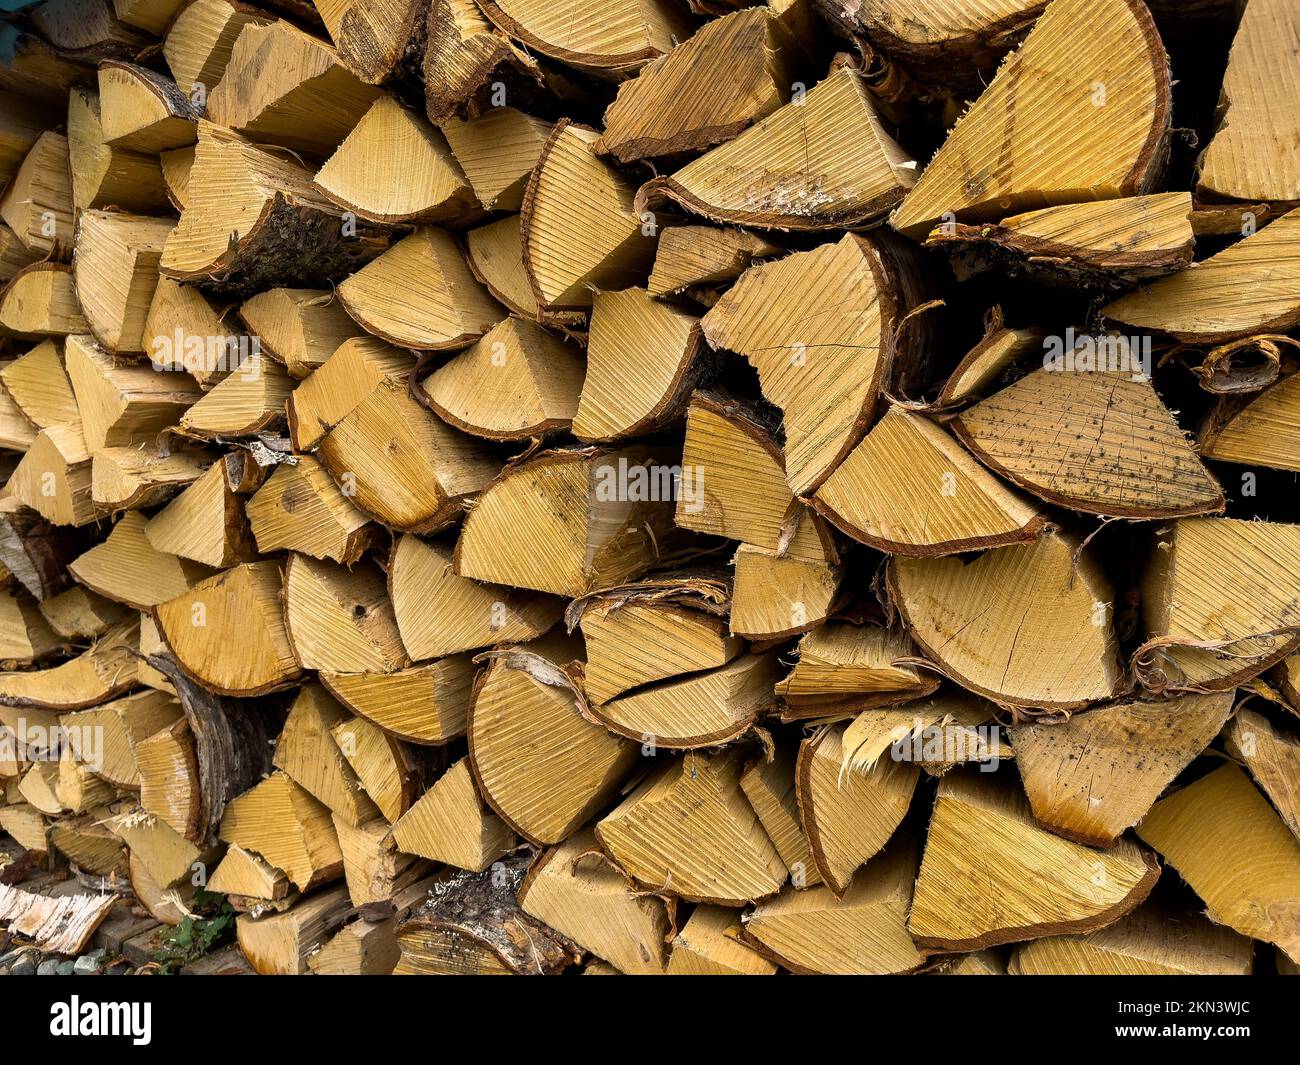 Gehacktes trockenes Brennholz Holzstämme, die für den Kamin gestapelt wurden - Stockfoto Stockfoto